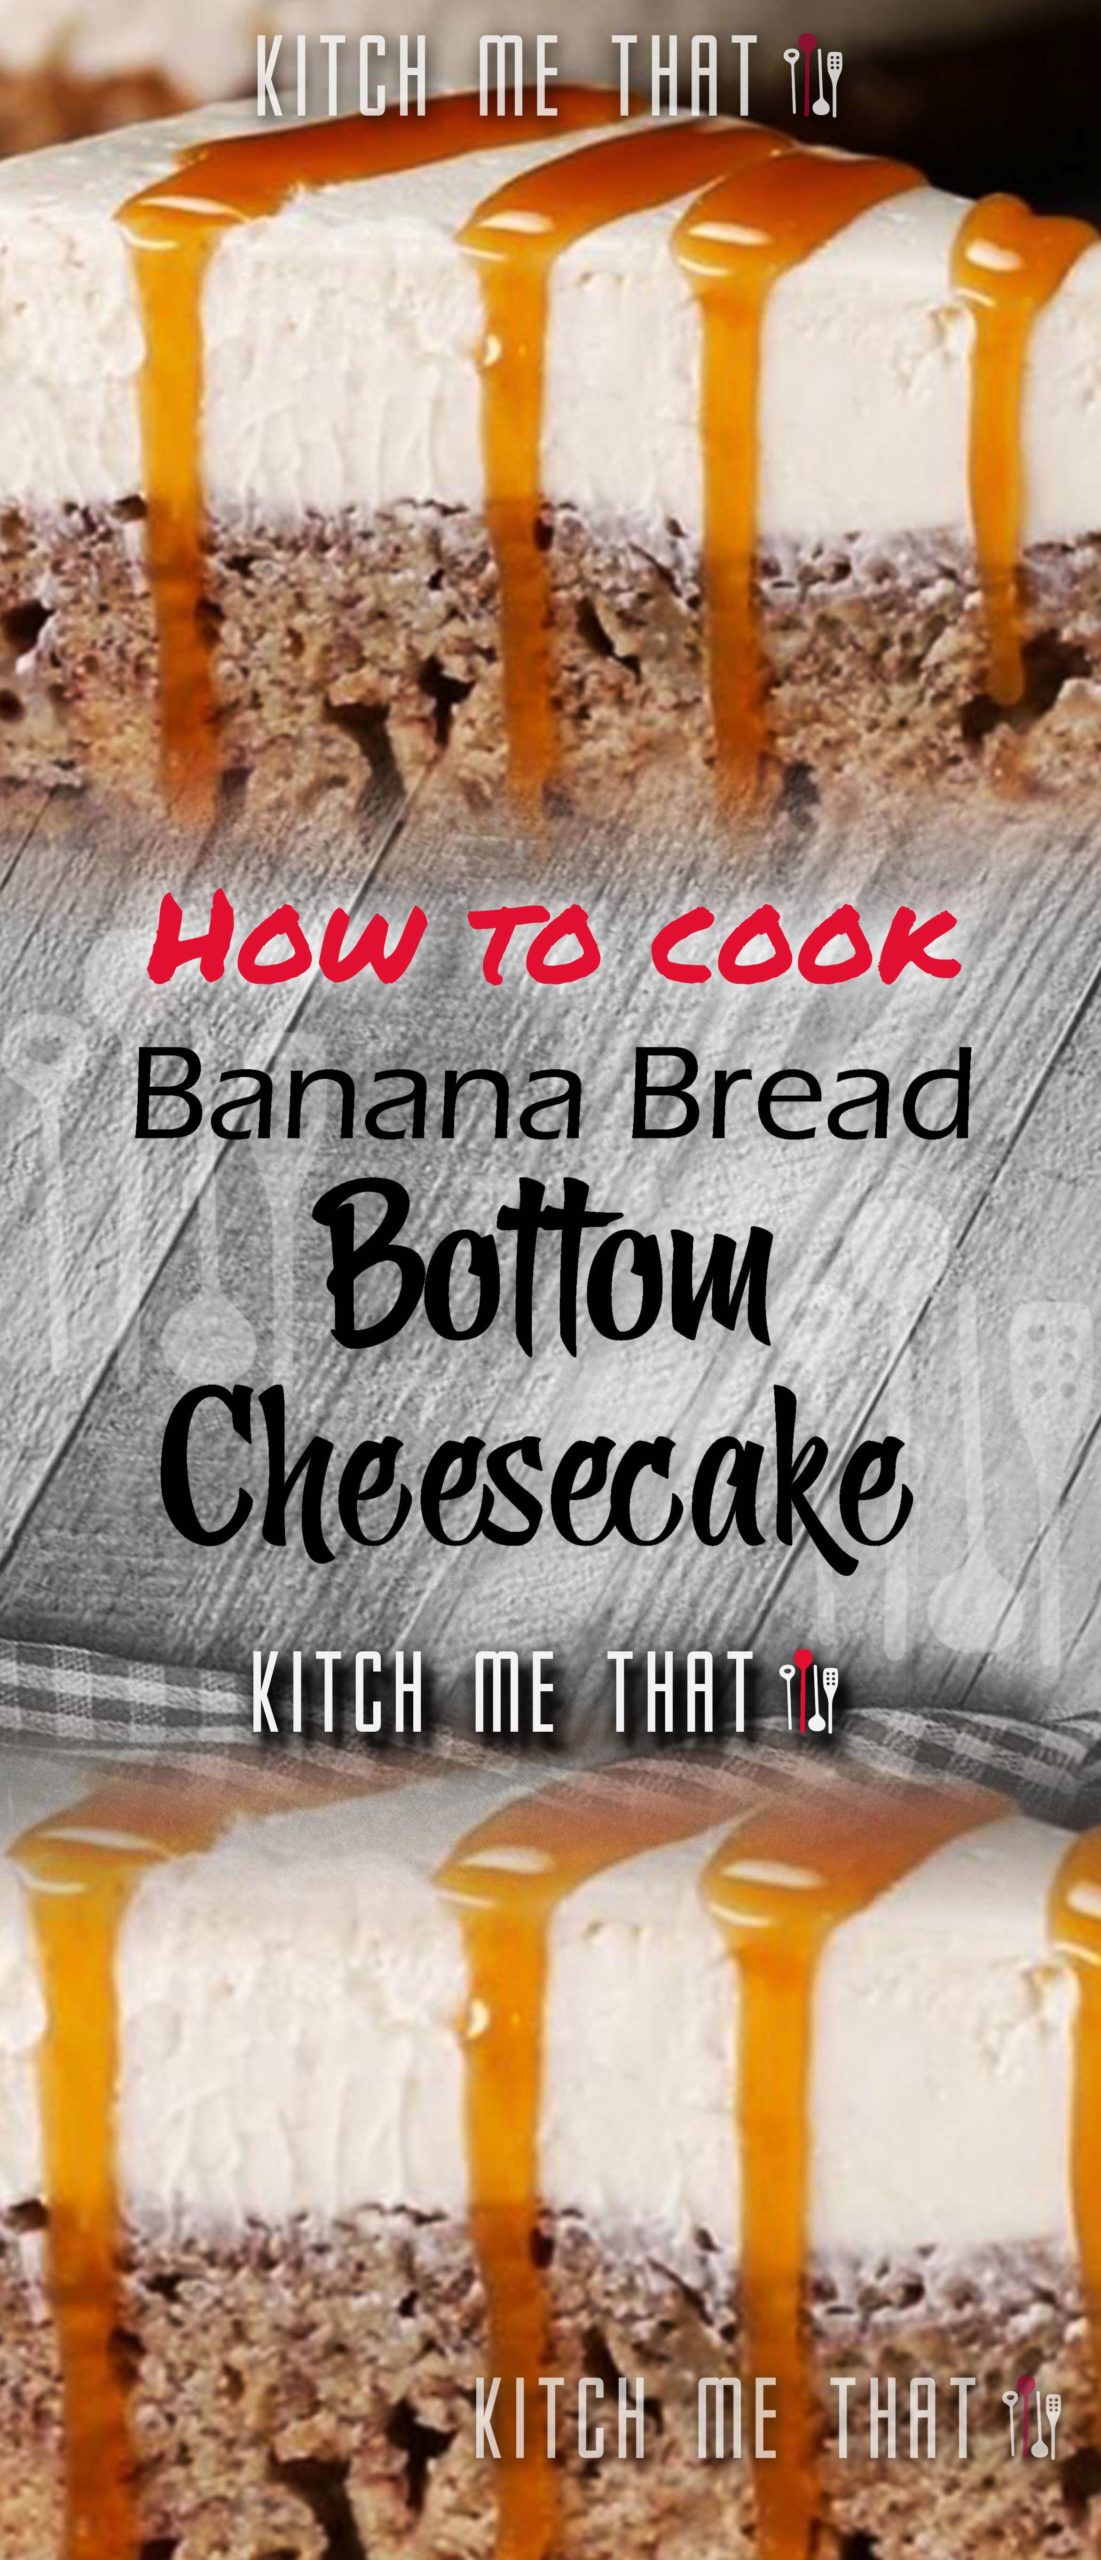 Incredible Banana Bread Bottom Cheesecake Recipe